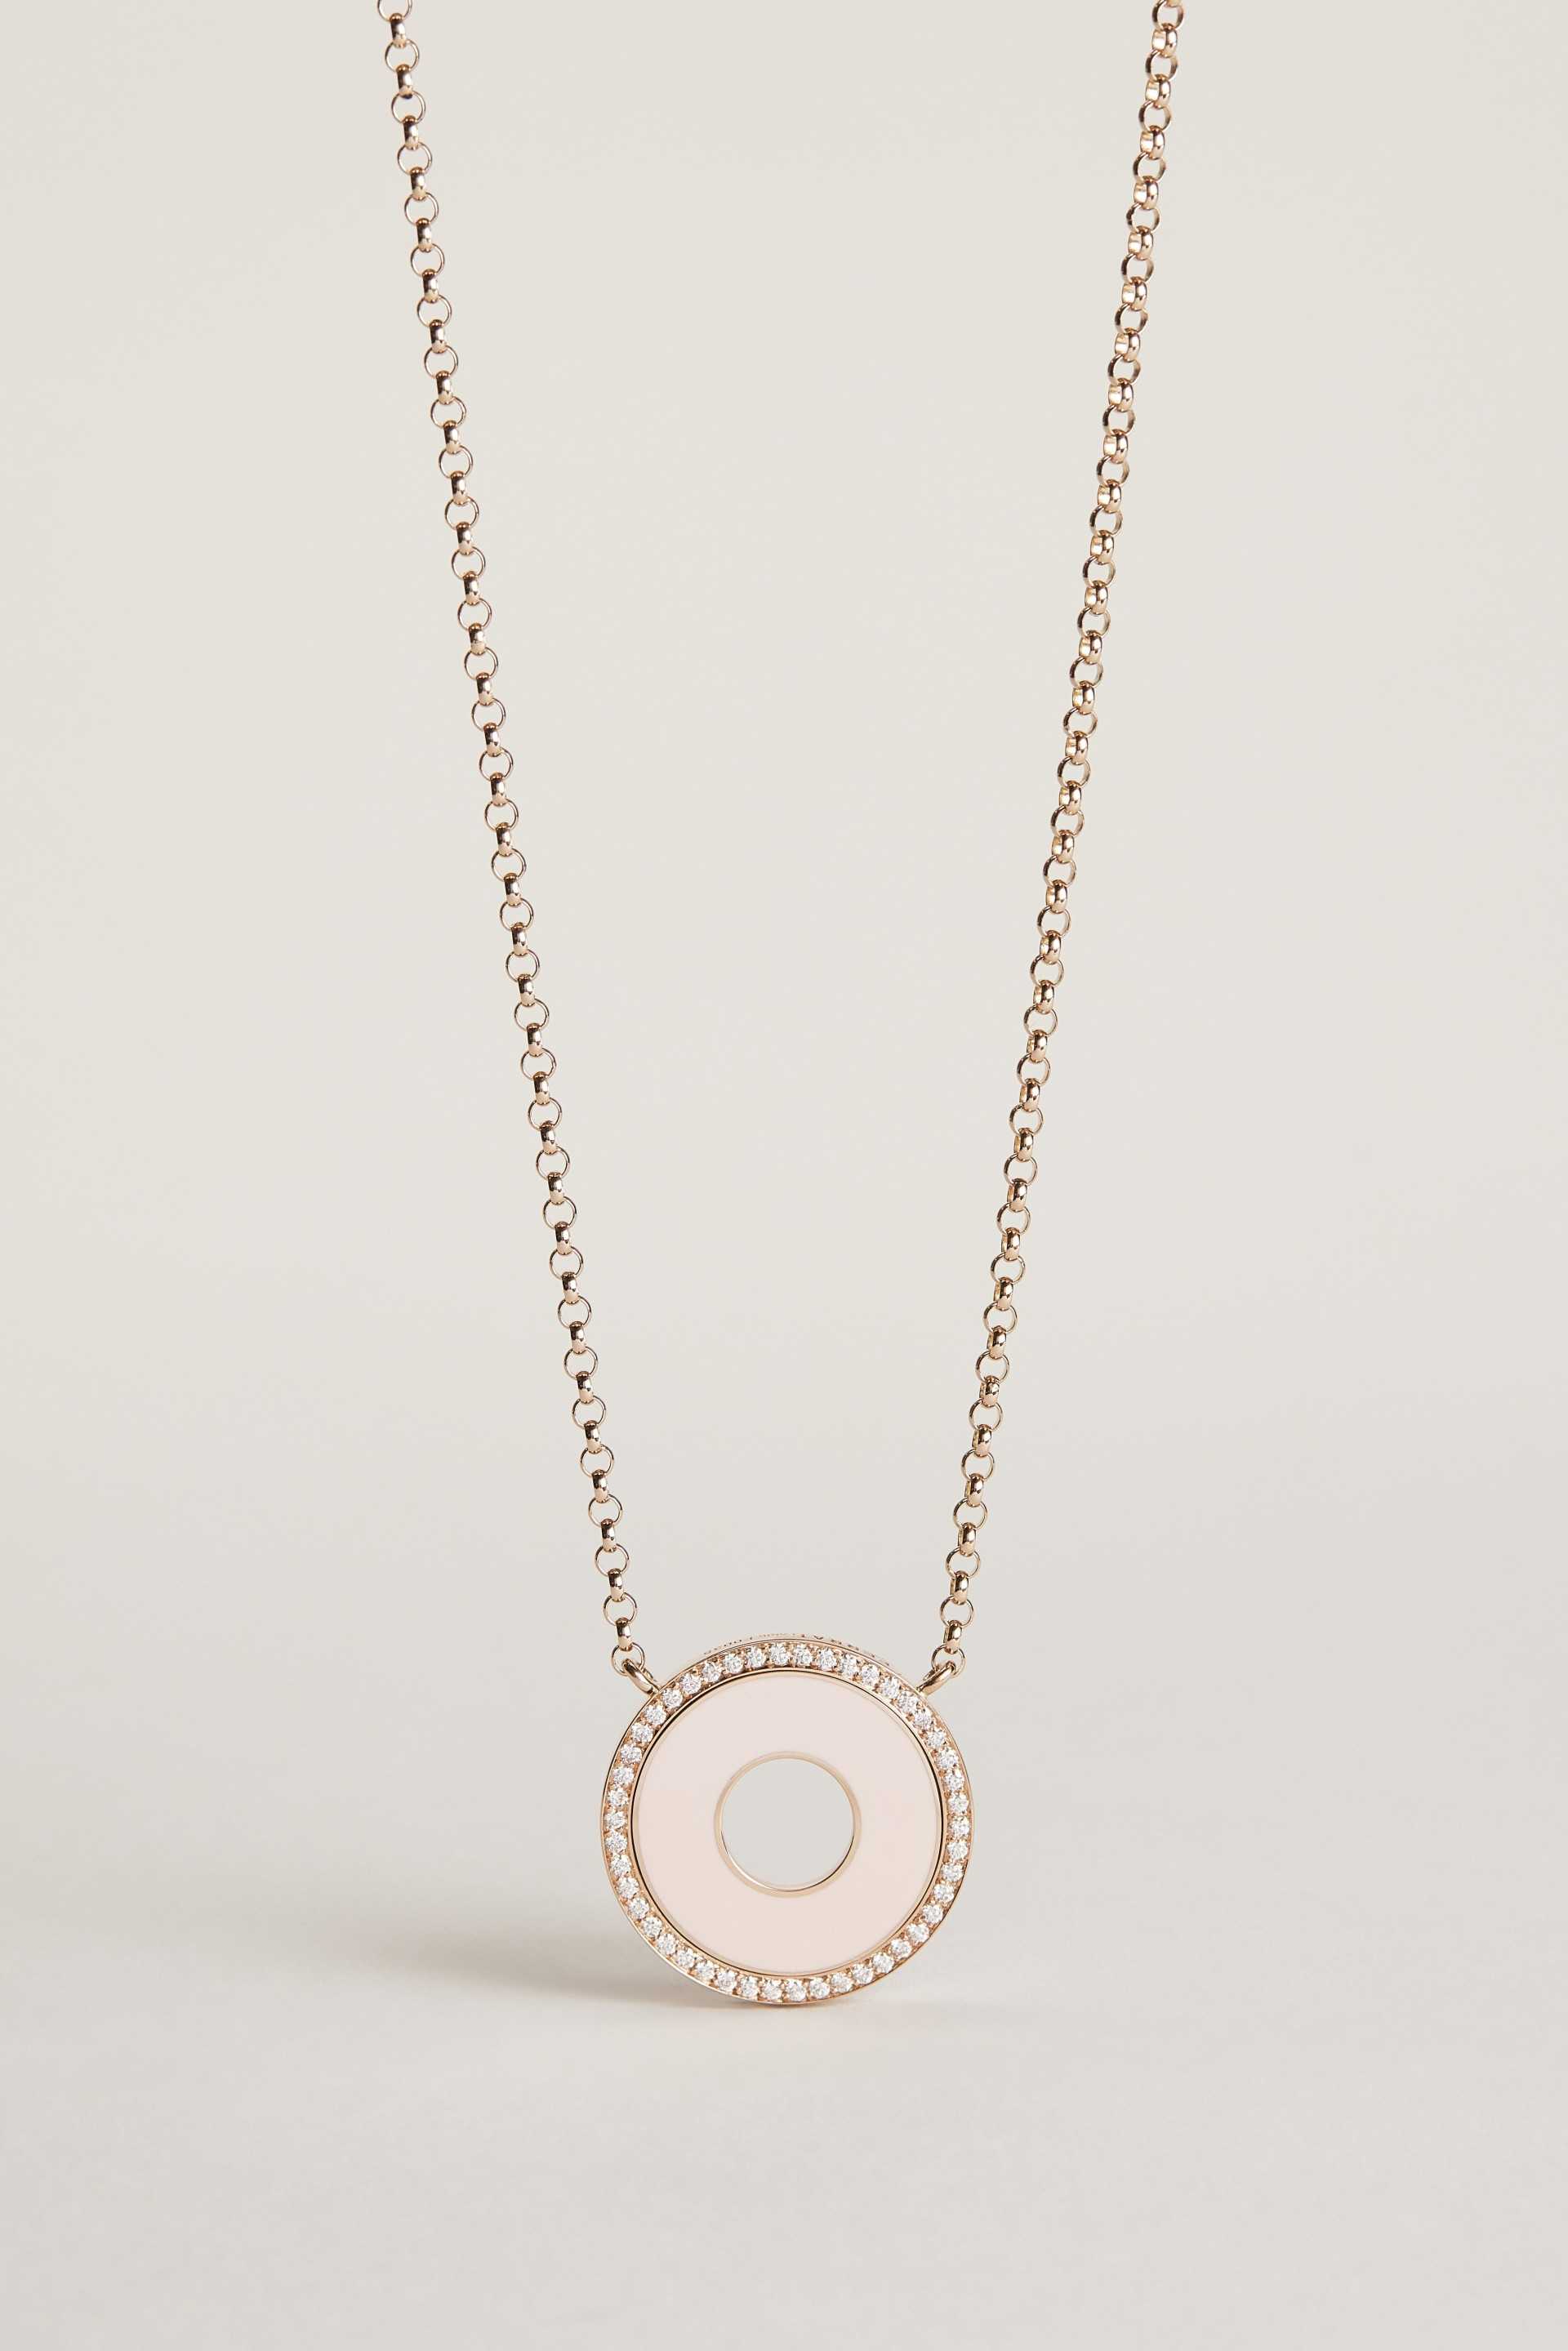 Paris Pink Lacquered Necklace